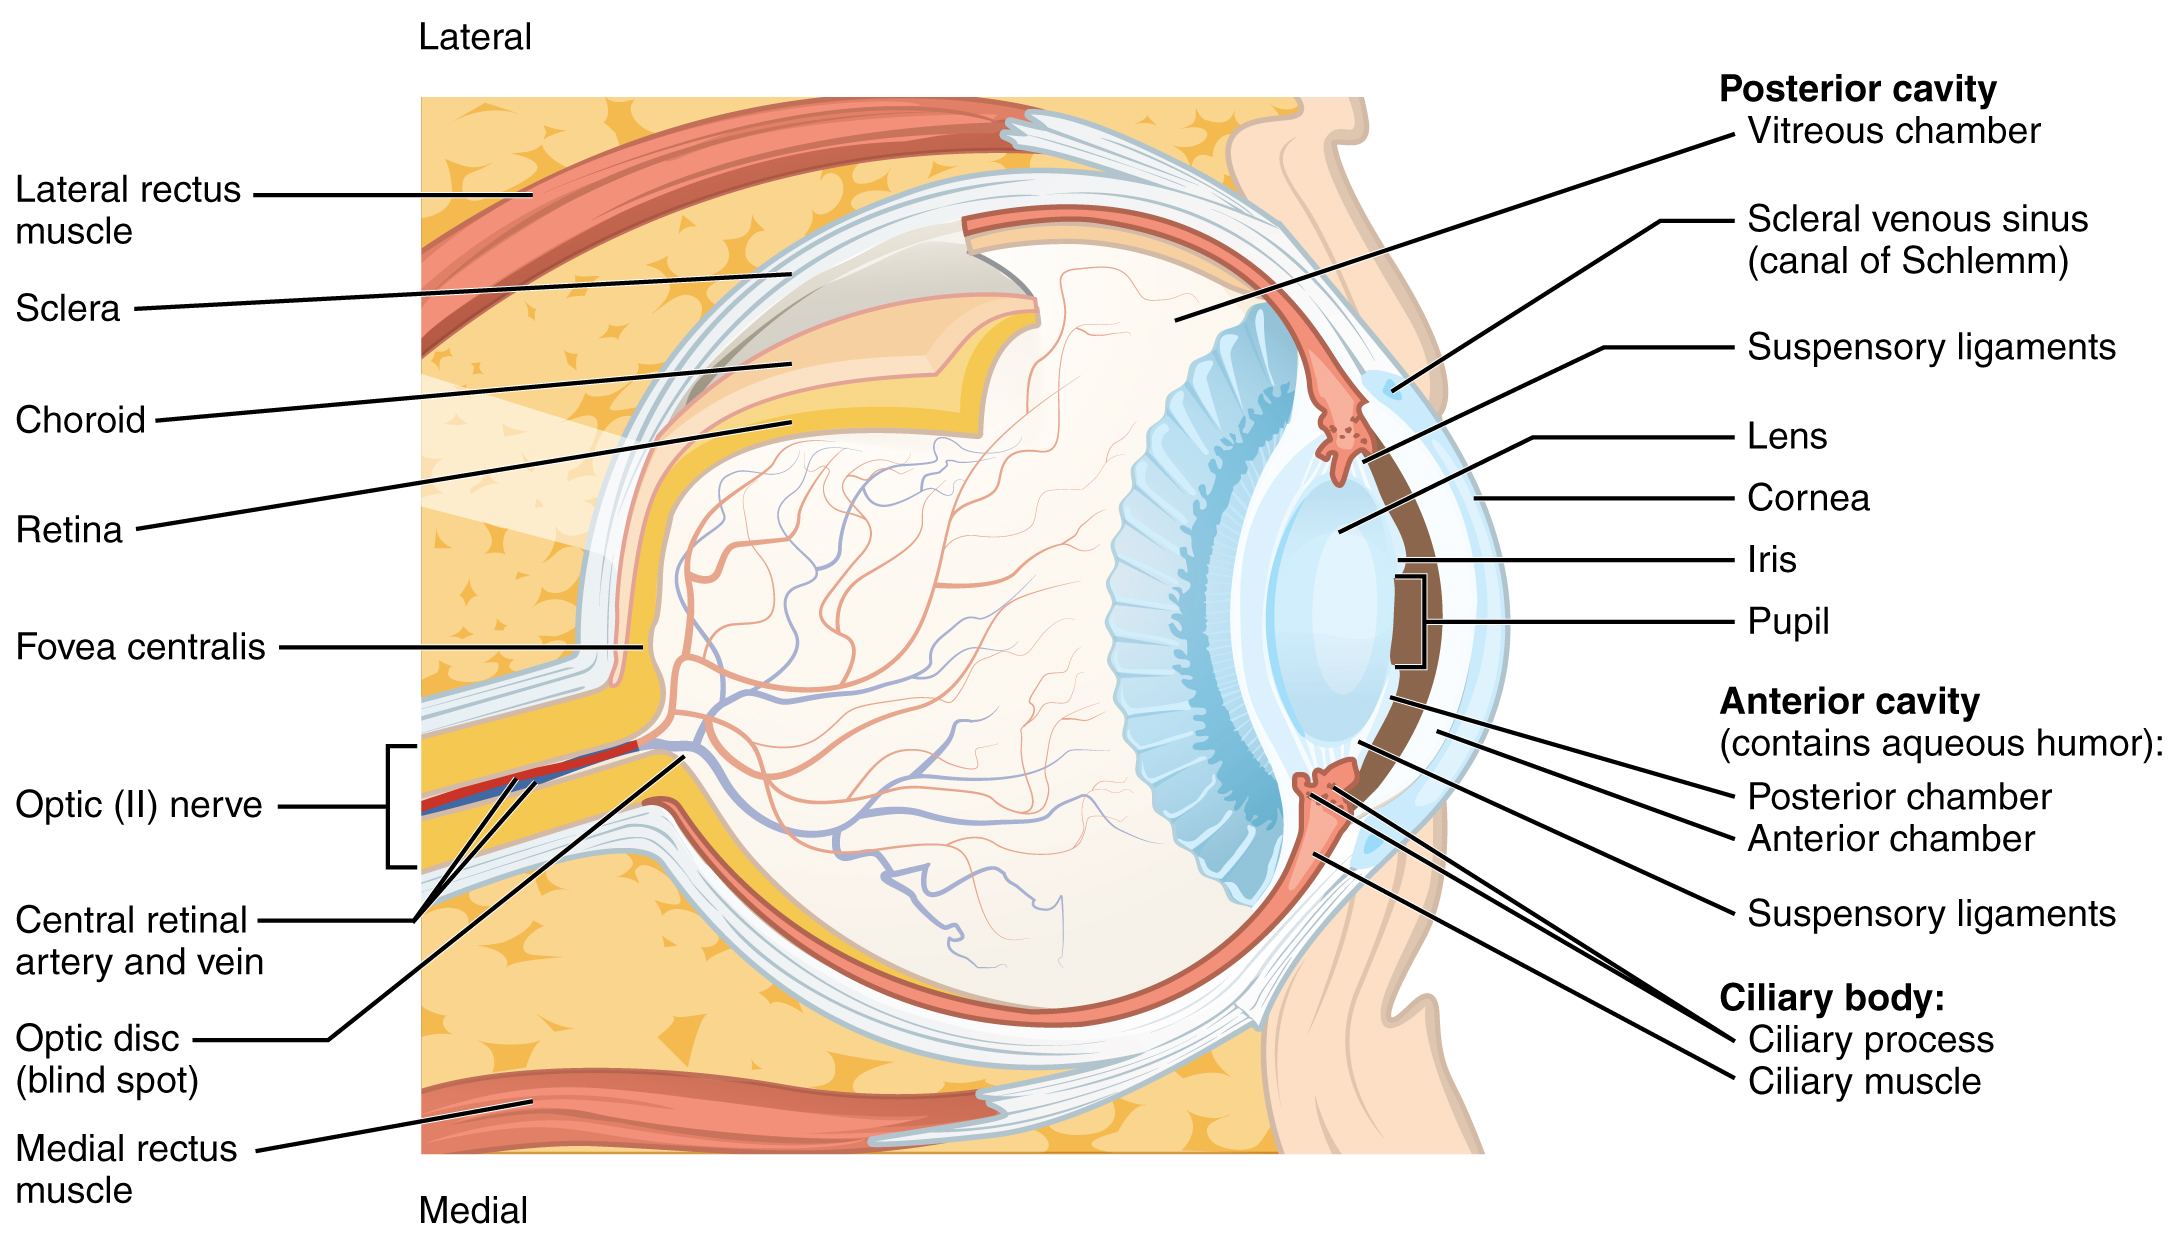 Cross-section of the eyeball